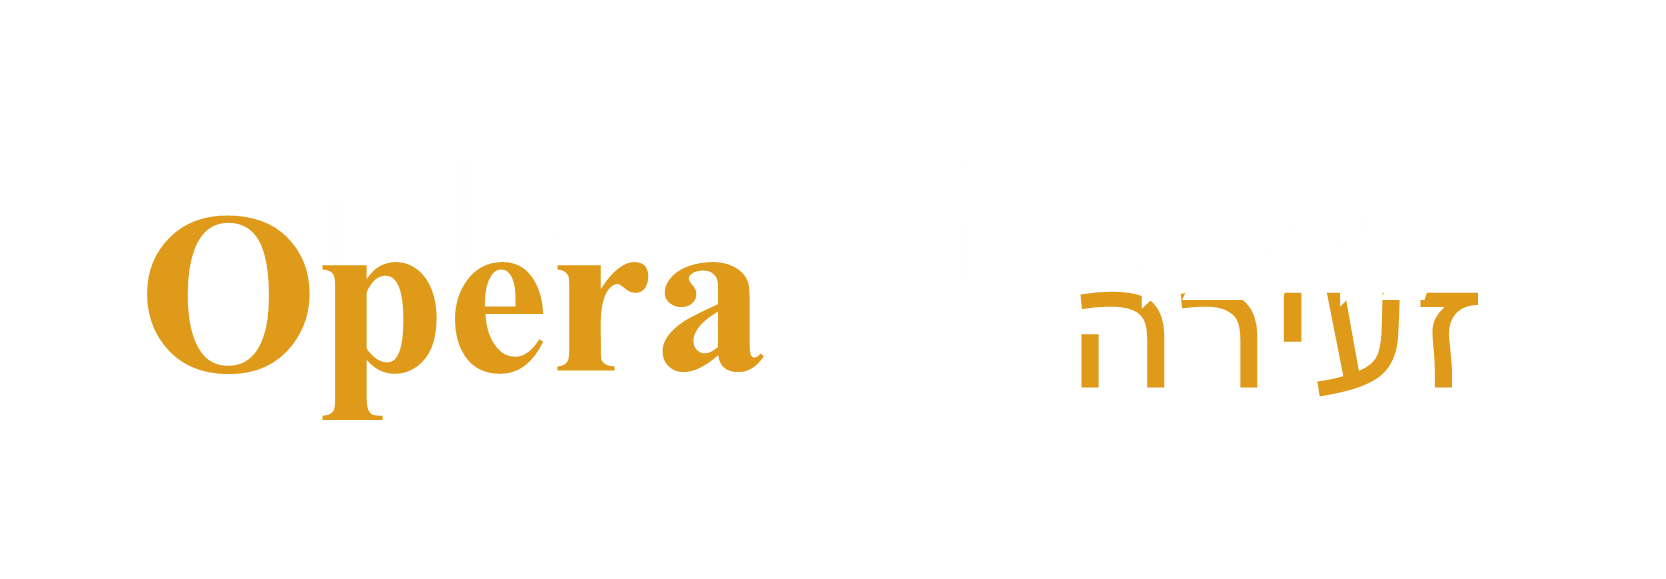 Little Opera Israel